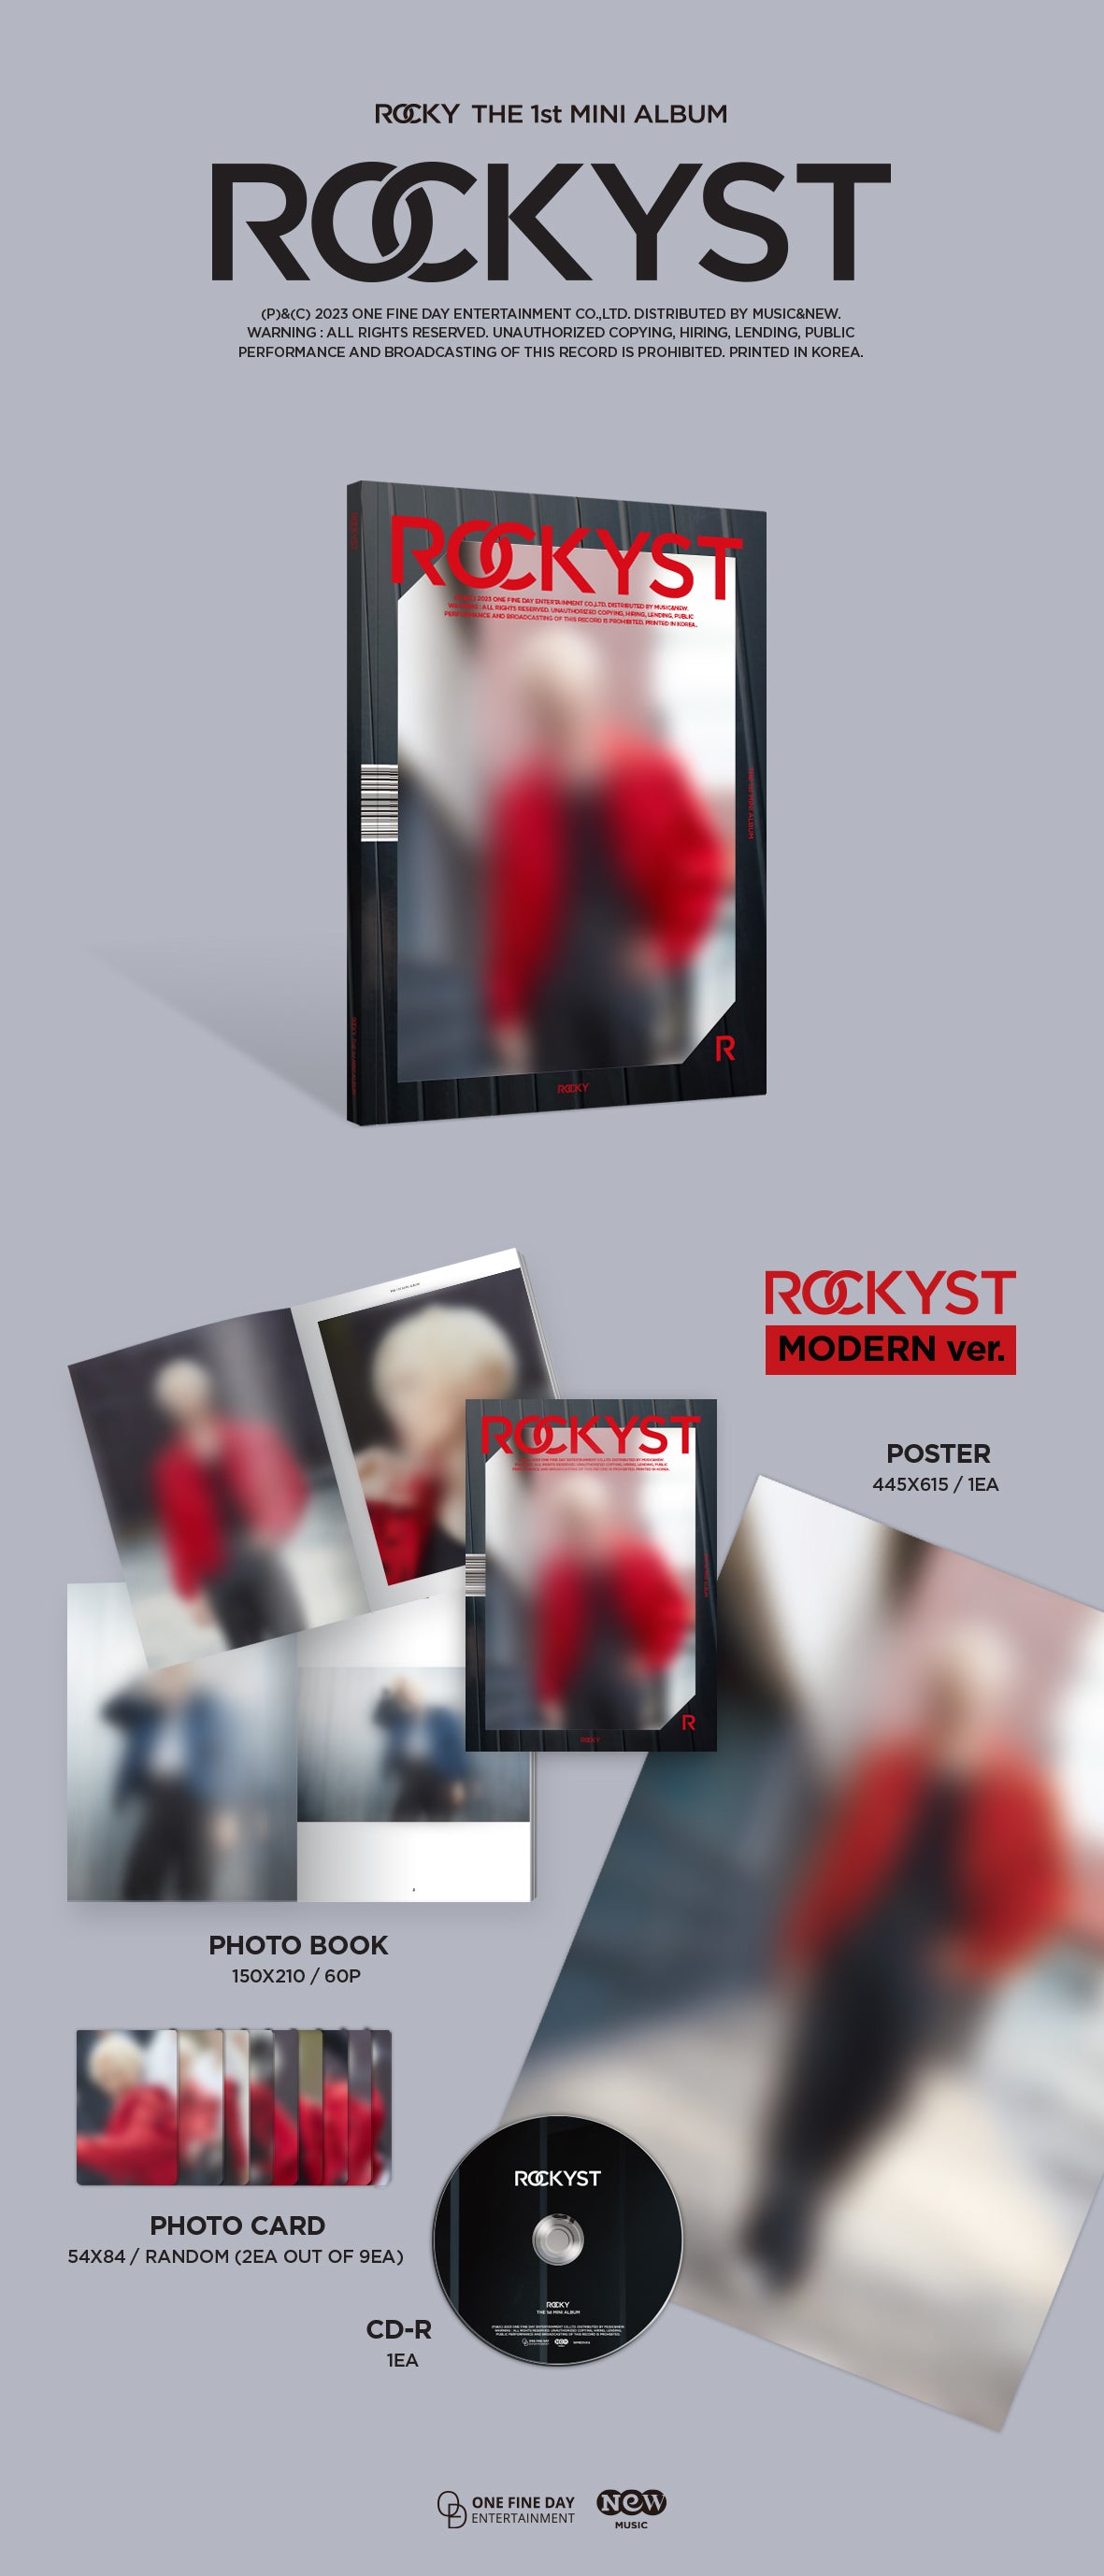 ROCKY - The 1st Mini Album ROCKYST (Modern Ver.)